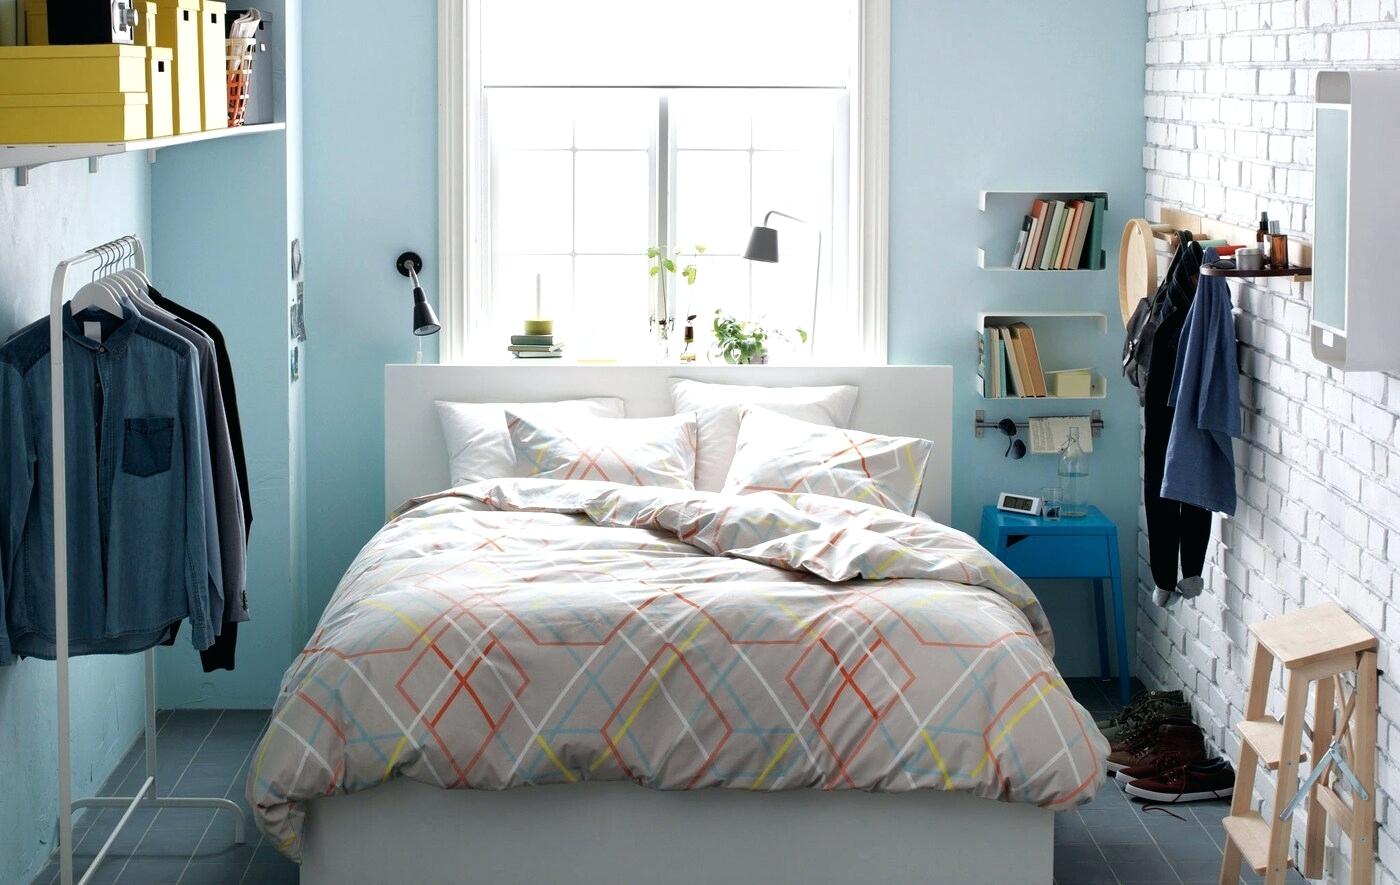  Refreshing Small Bedroom Ideas